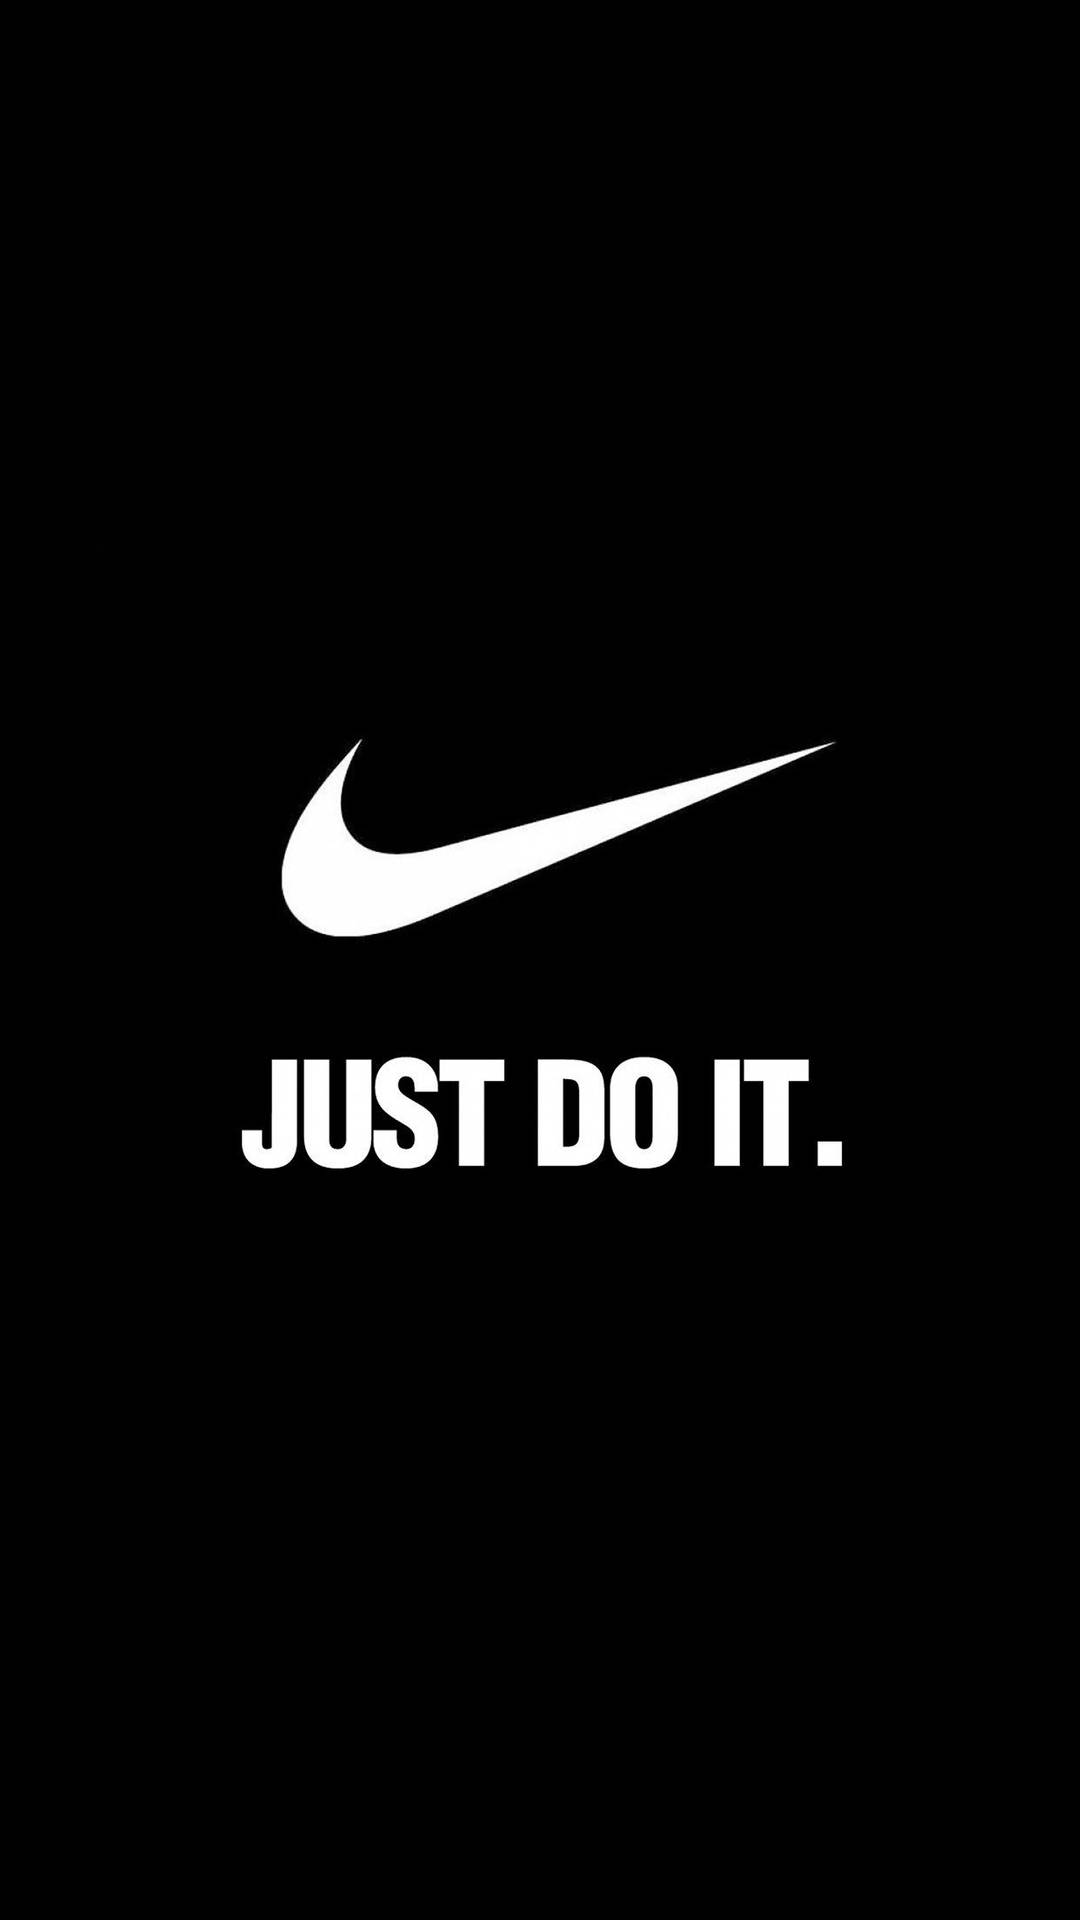 Nike Brand Just Do It Wallpaper